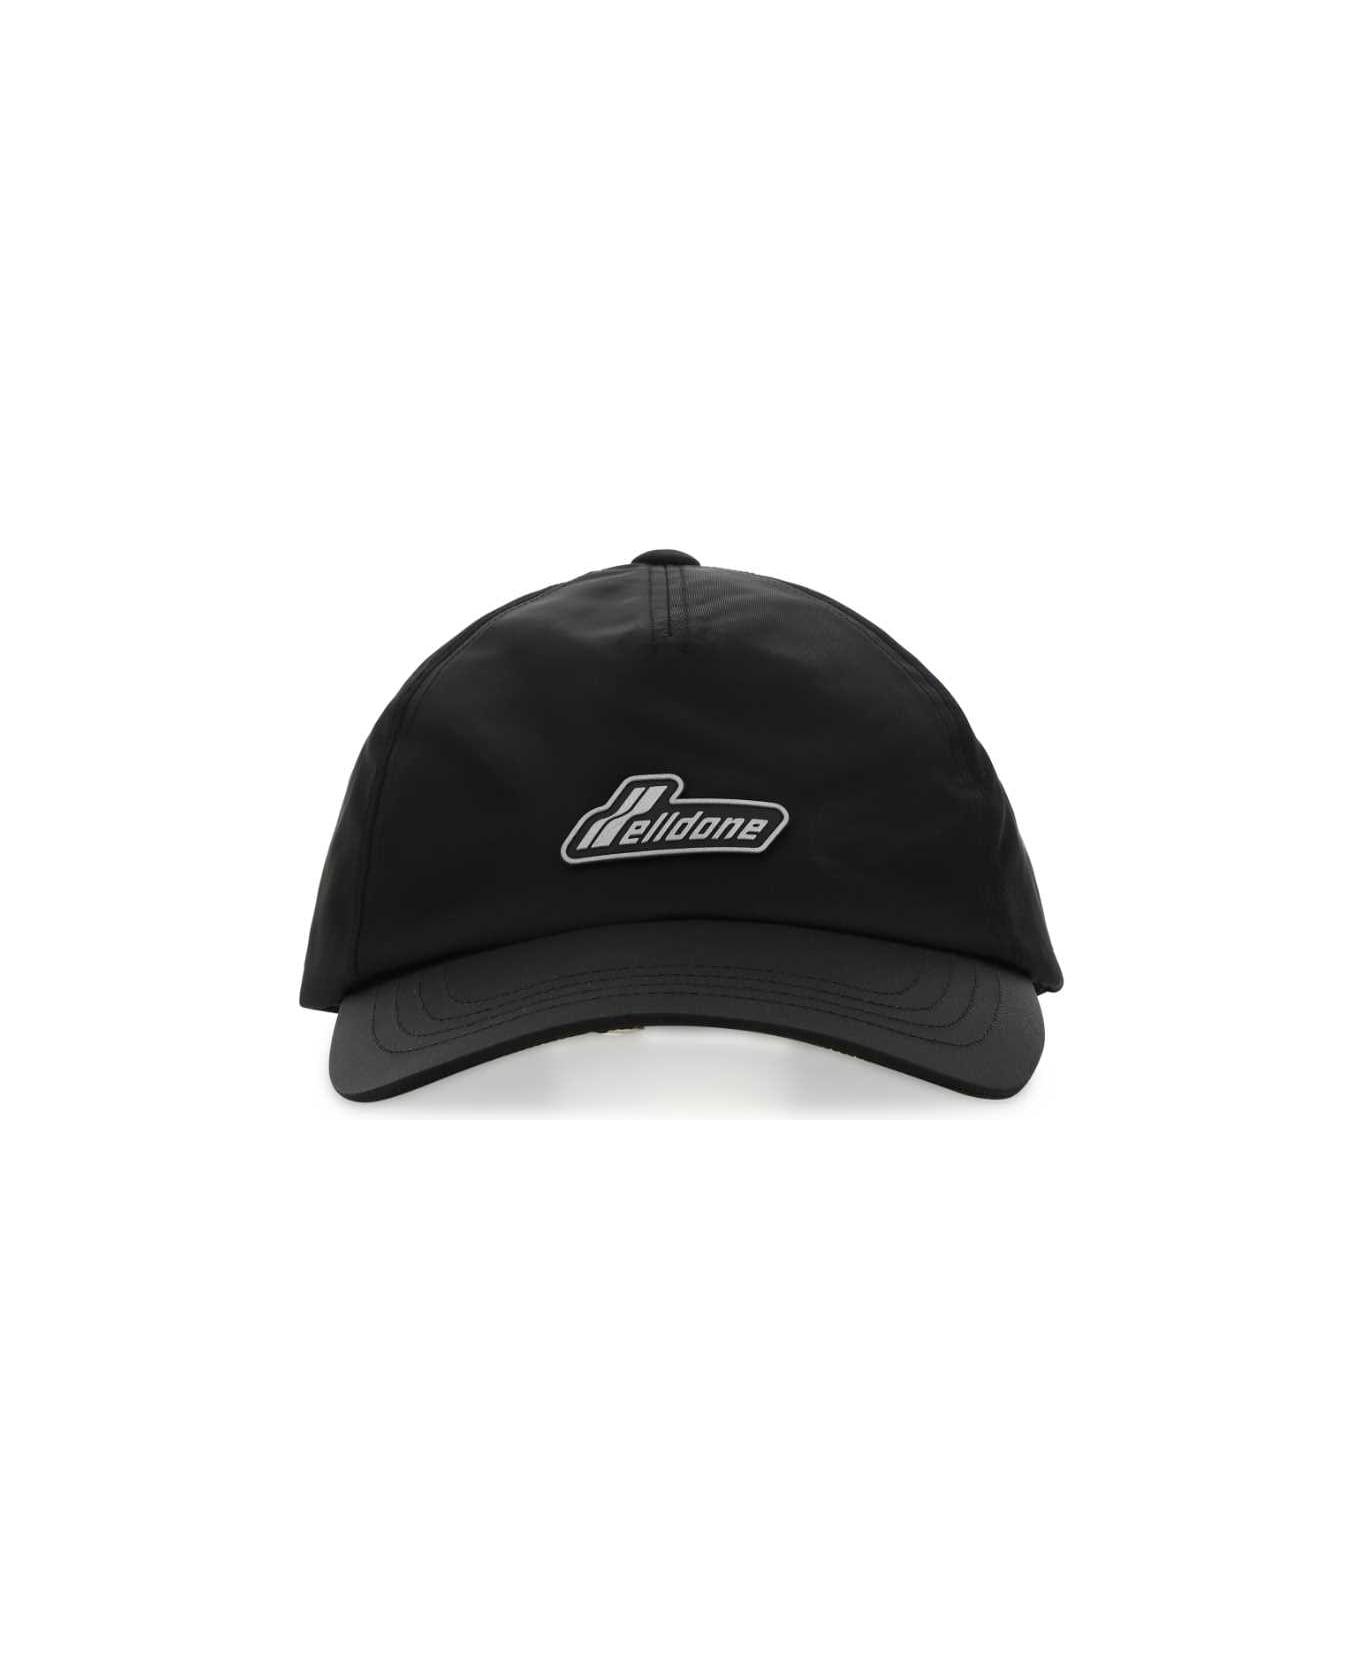 WE11 DONE Black Nylon Baseball Cap - BLACK 帽子